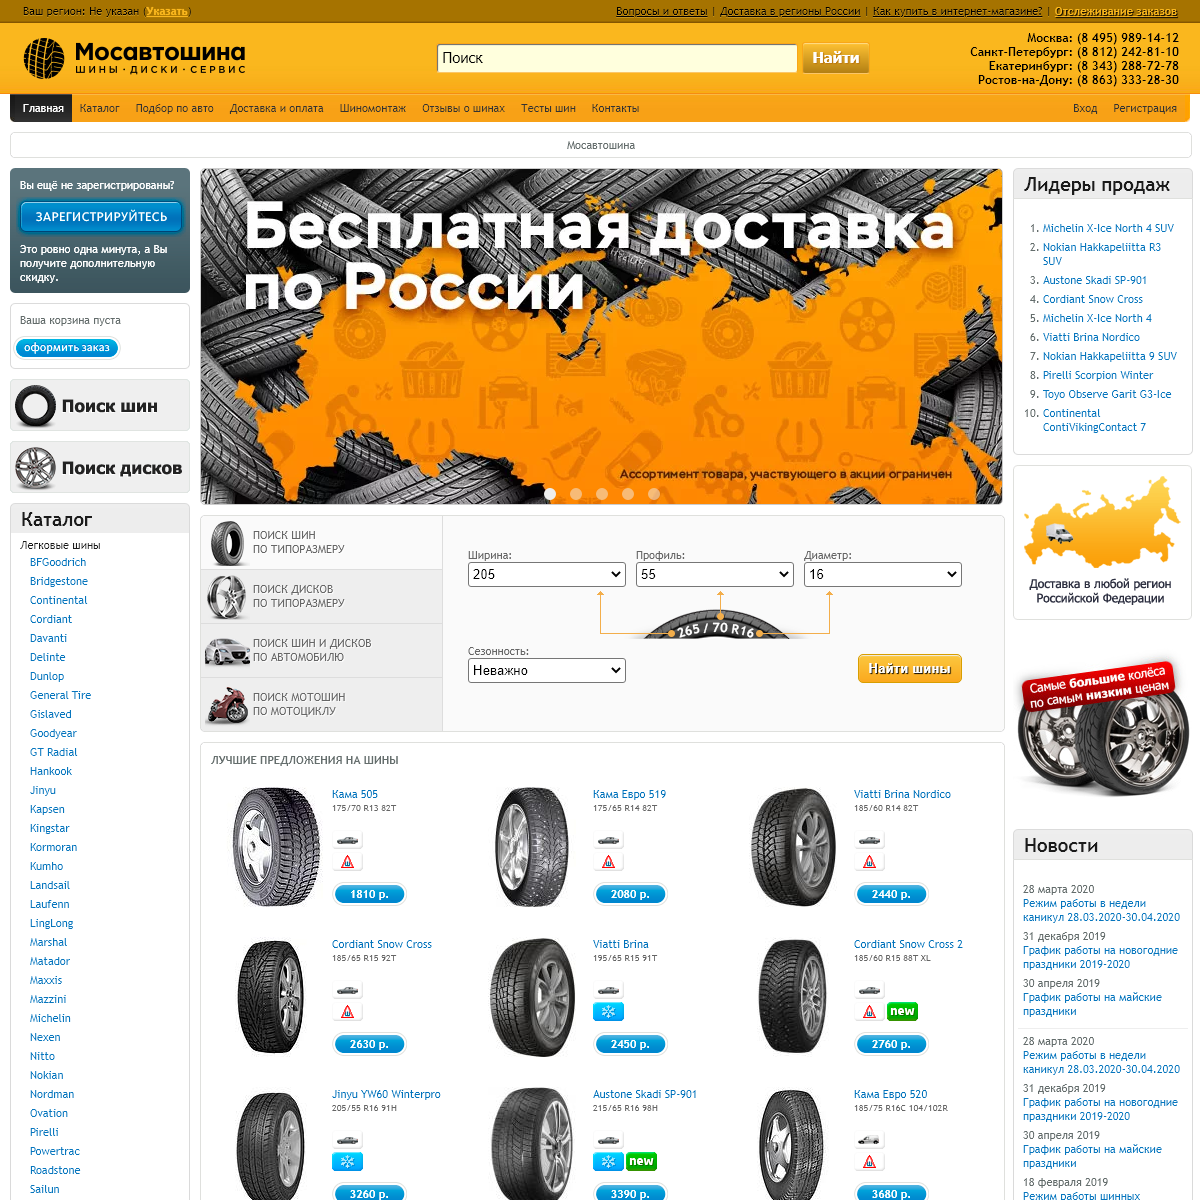 A complete backup of mosautoshina.ru